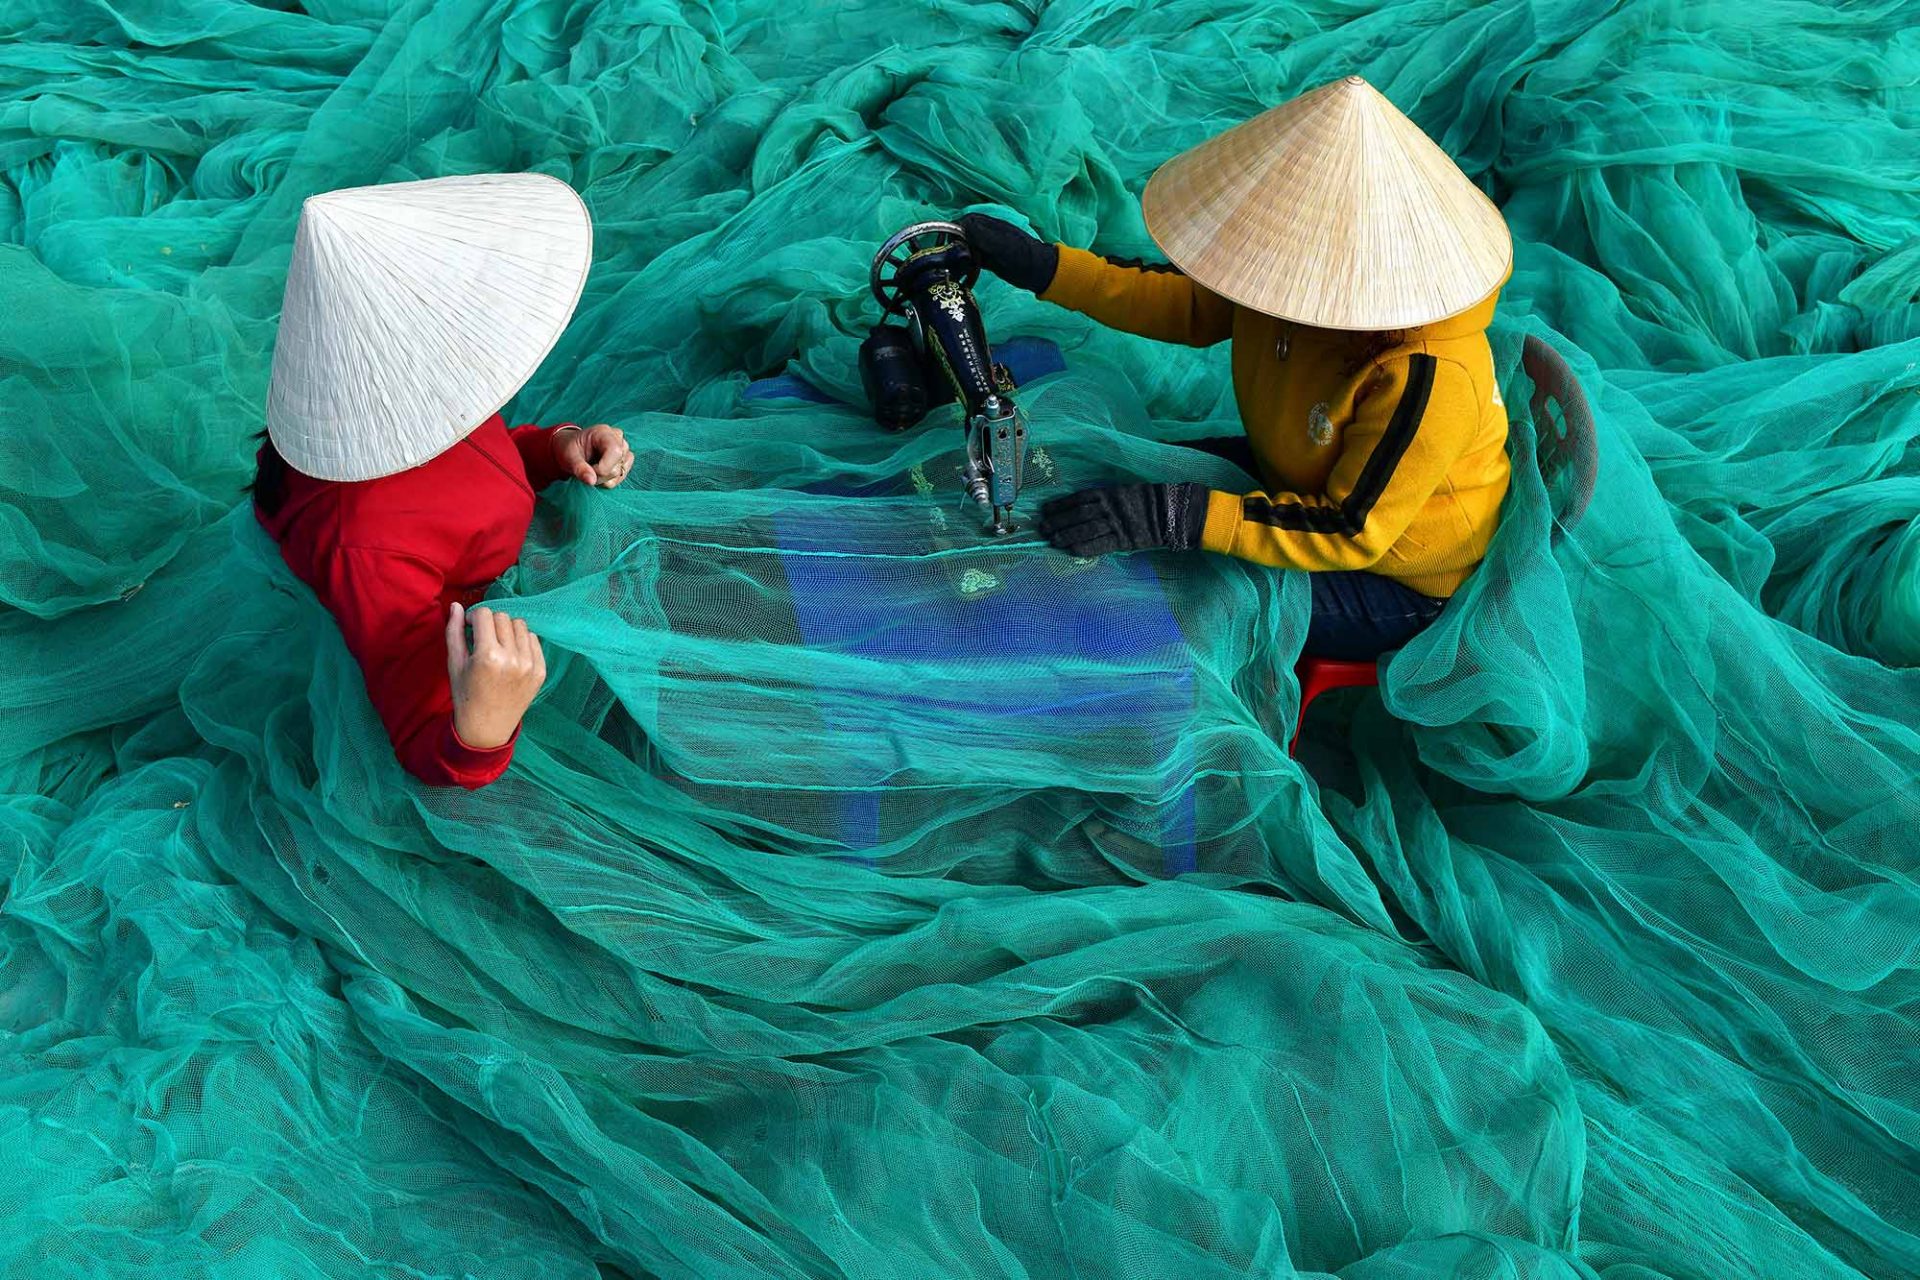 Mann Fishing Net Repair Vietnam M Huy Flickr